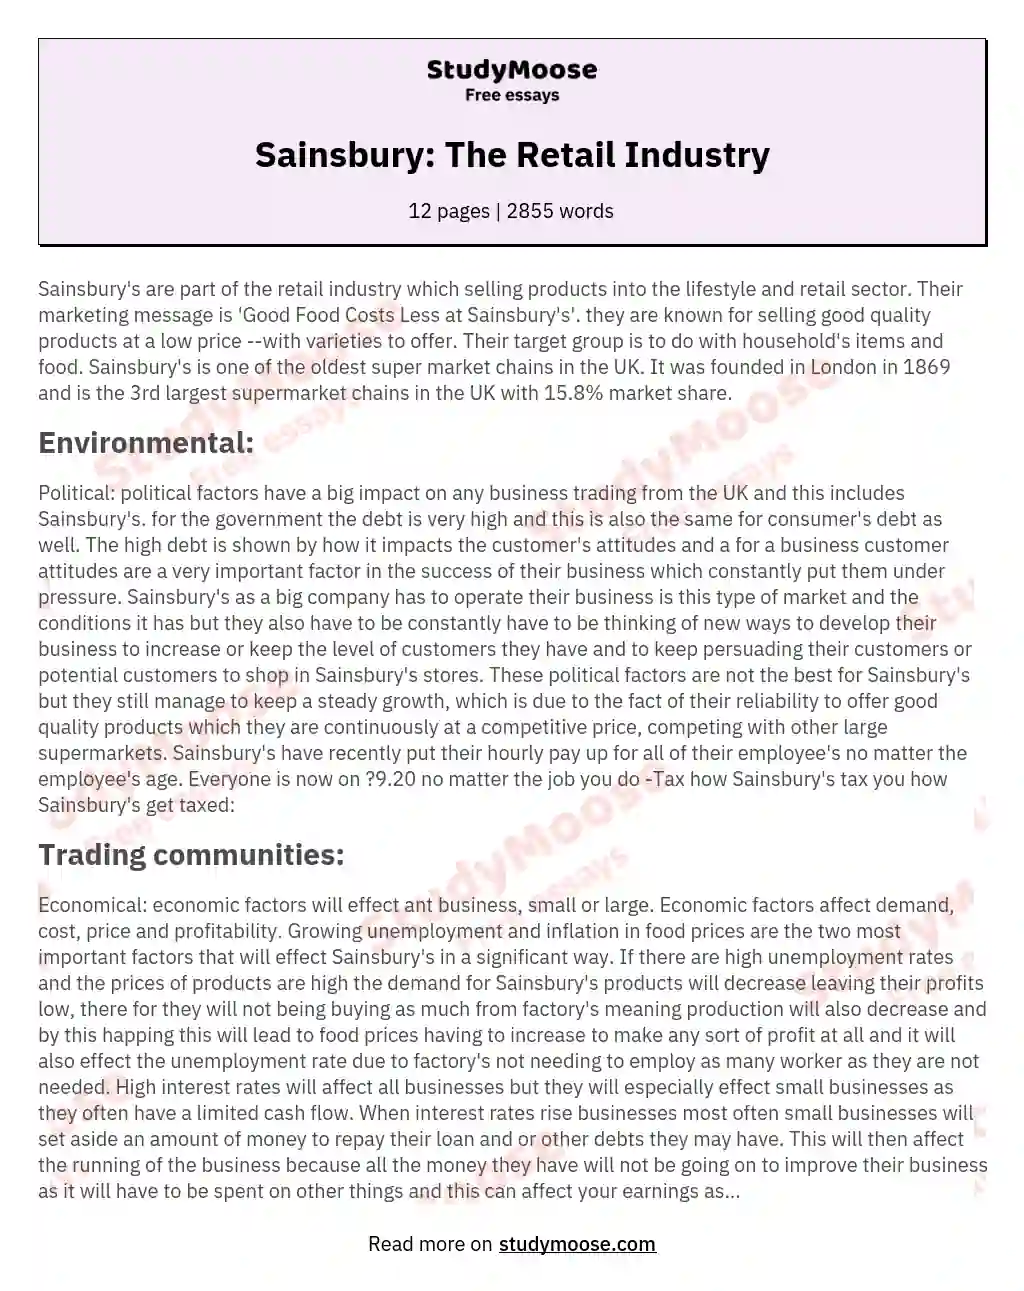 Sainsbury: The Retail Industry essay